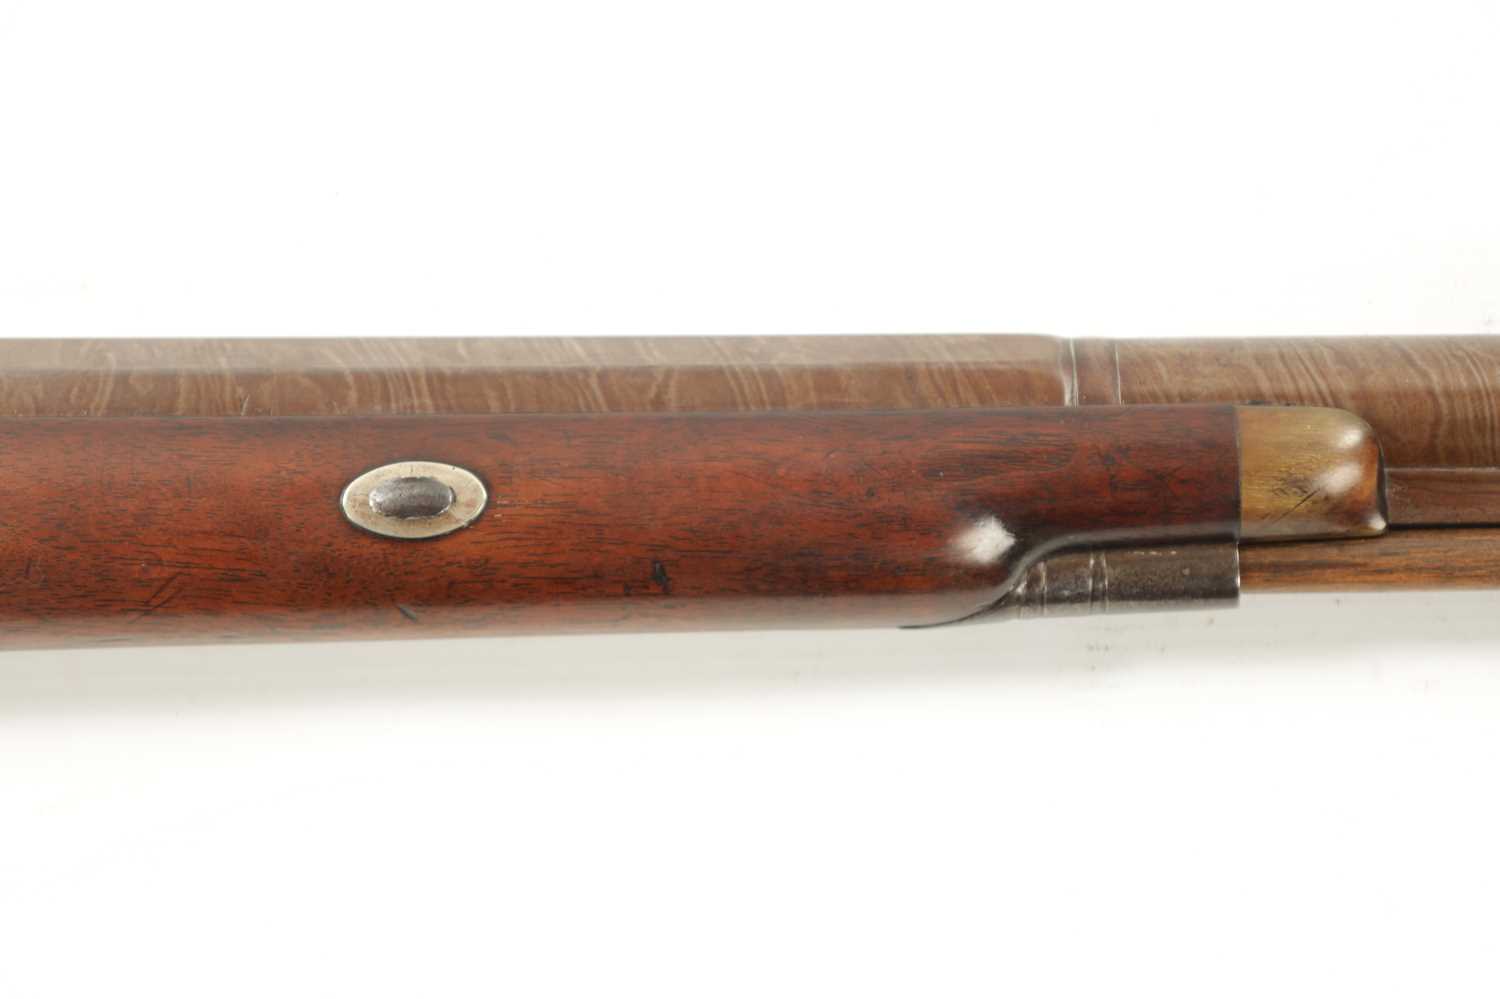 THOMAS FLETCHER. A 19TH CENTURY PERCUSSION FOWLING GUN - Image 4 of 8